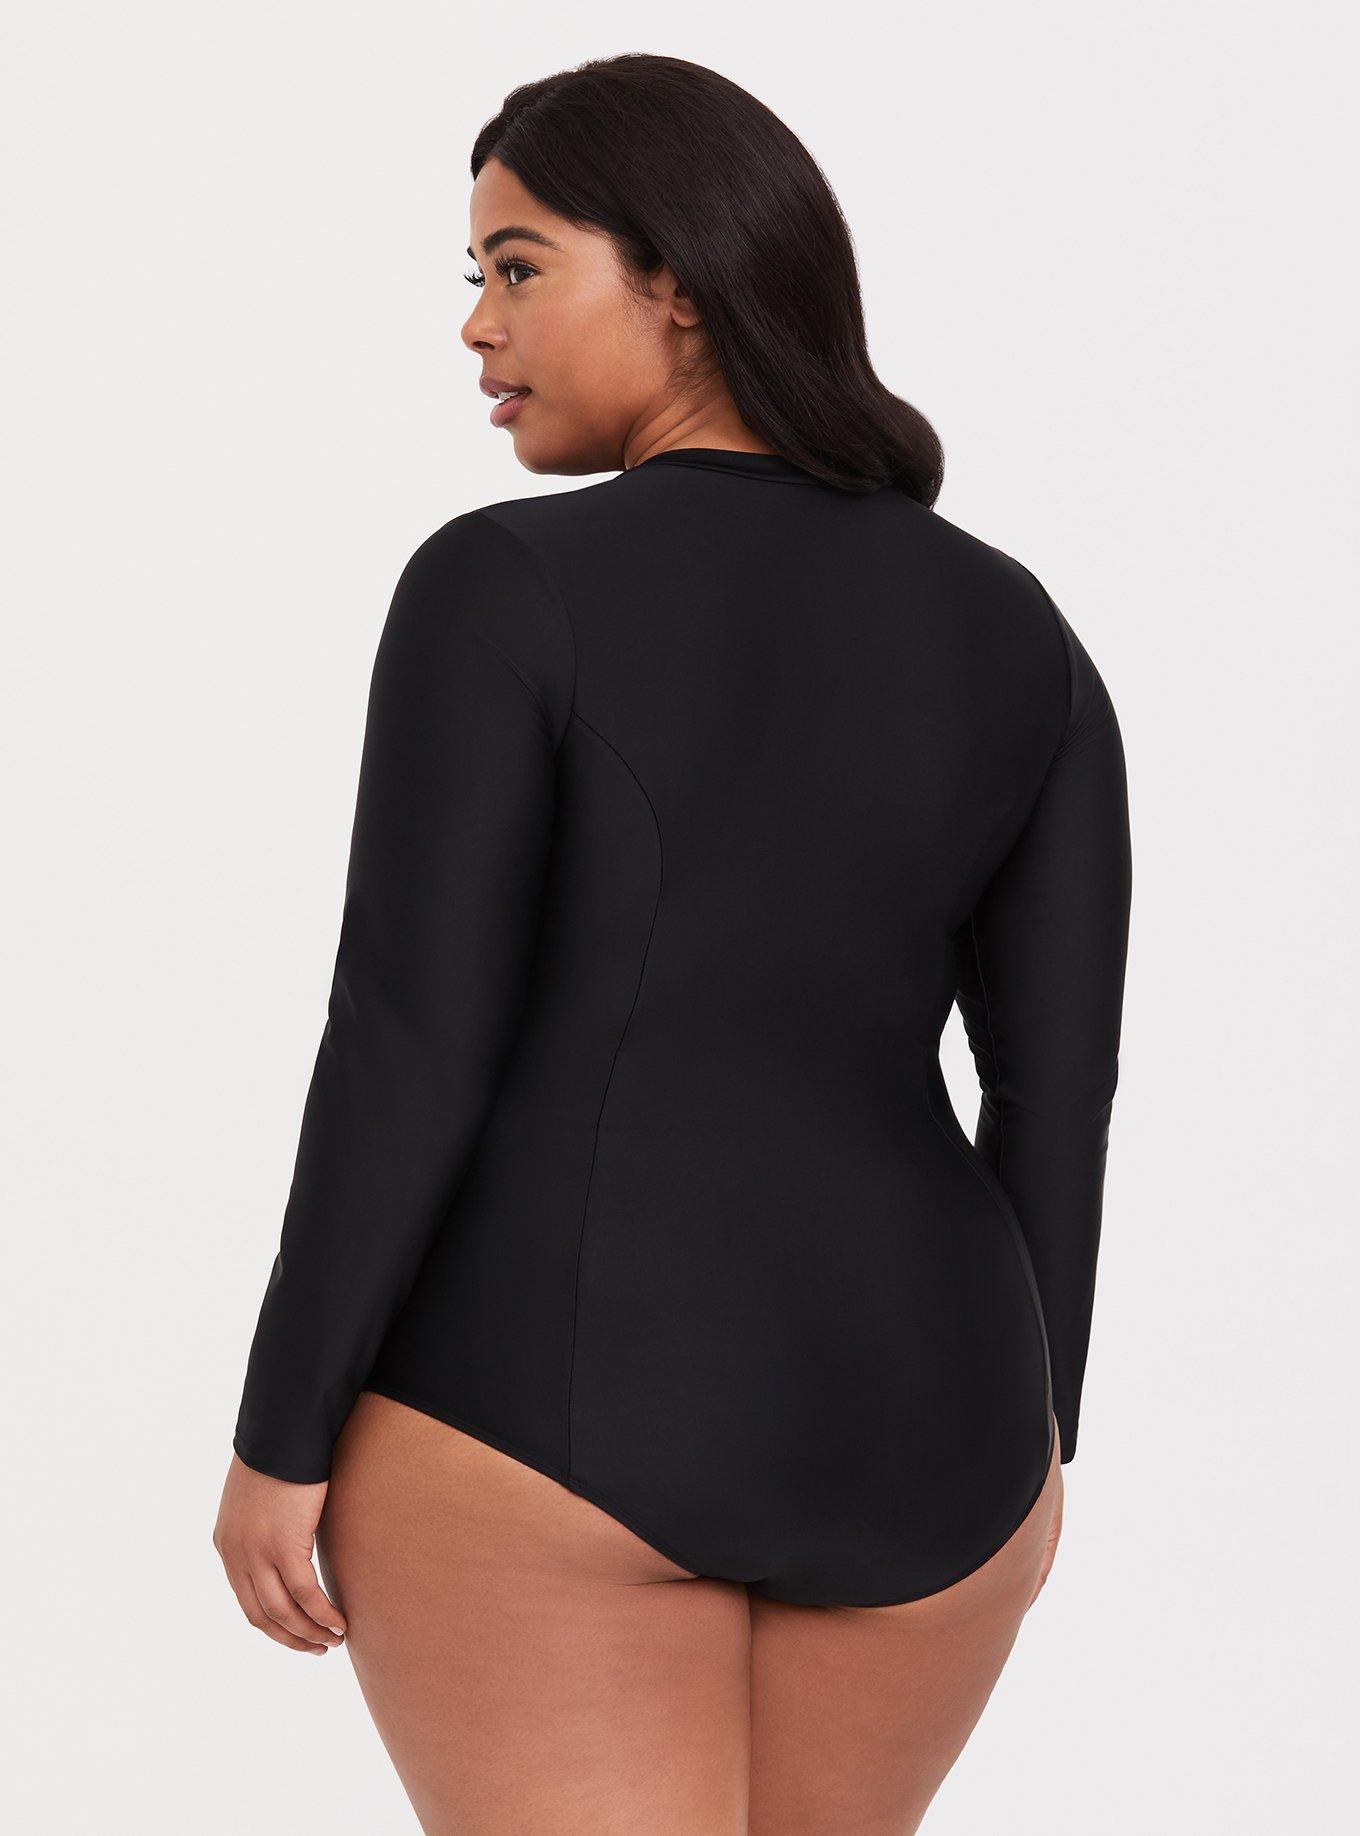 EHQJNJ Tankini Swimsuits for Plus Size Women Fashion Long Sleeve